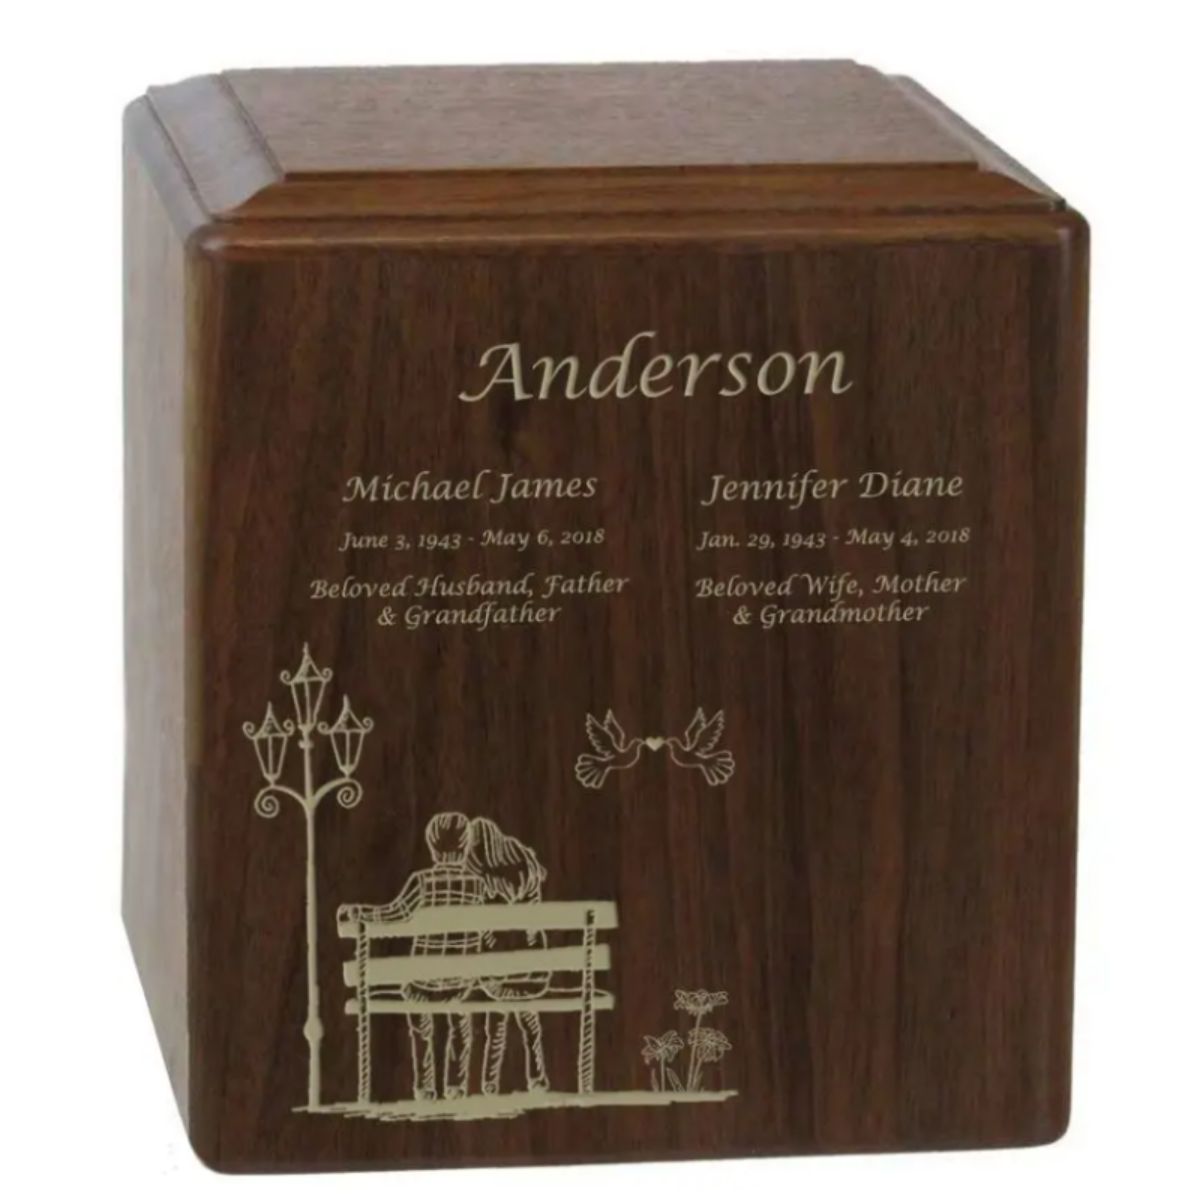 The Precious Memories Companion Urn is a beautifully handmade urn of walnut wood